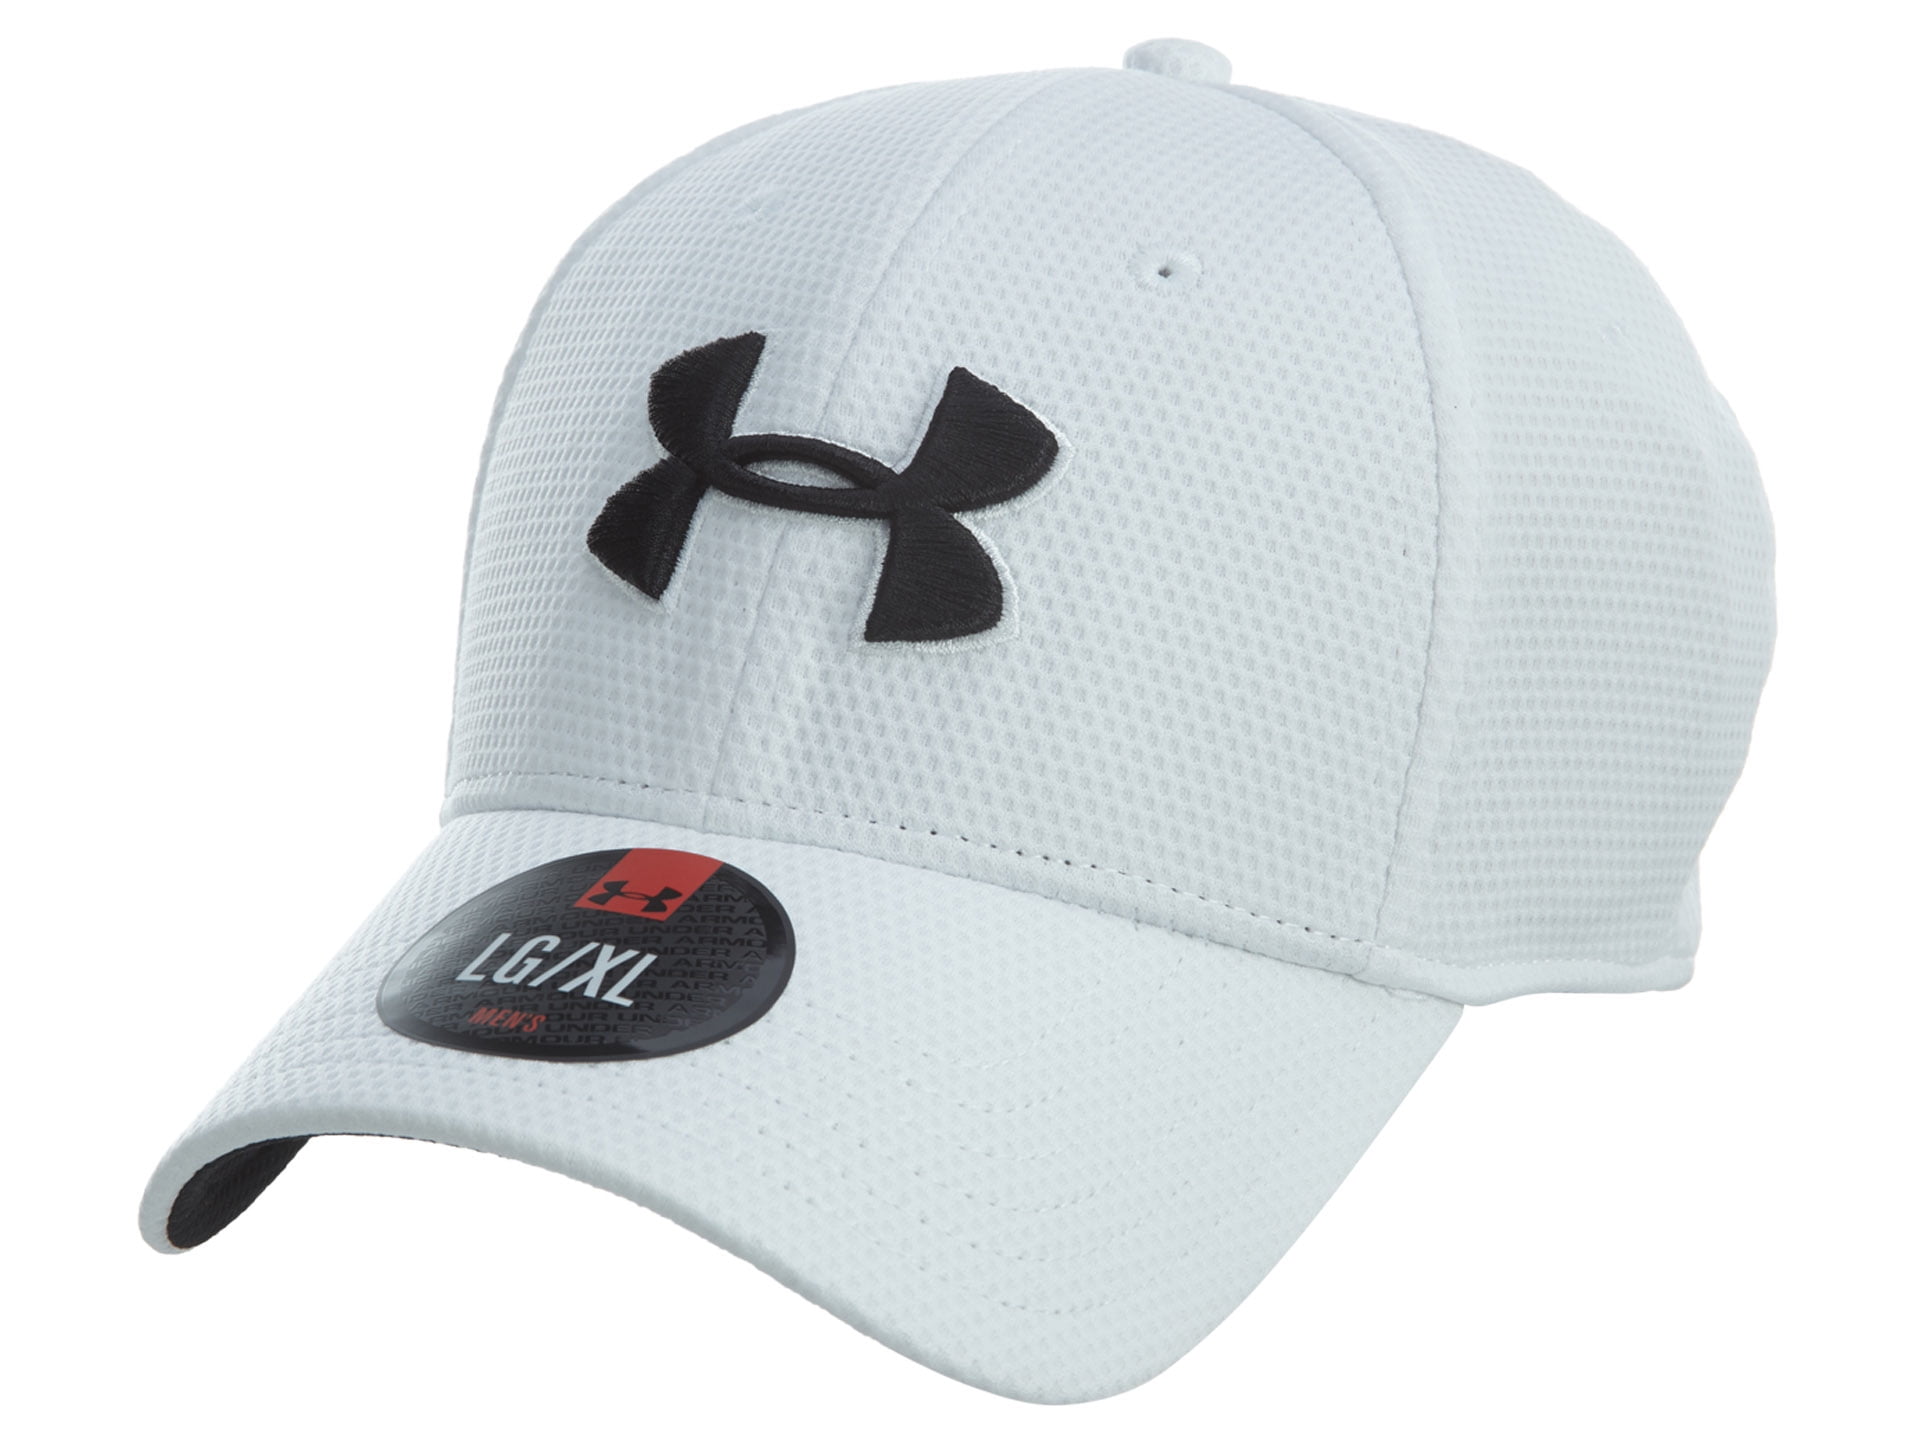 Under Armour Men's UA Blitzing II Stretch Fit Baseball Cap Hat (M/L, White)  